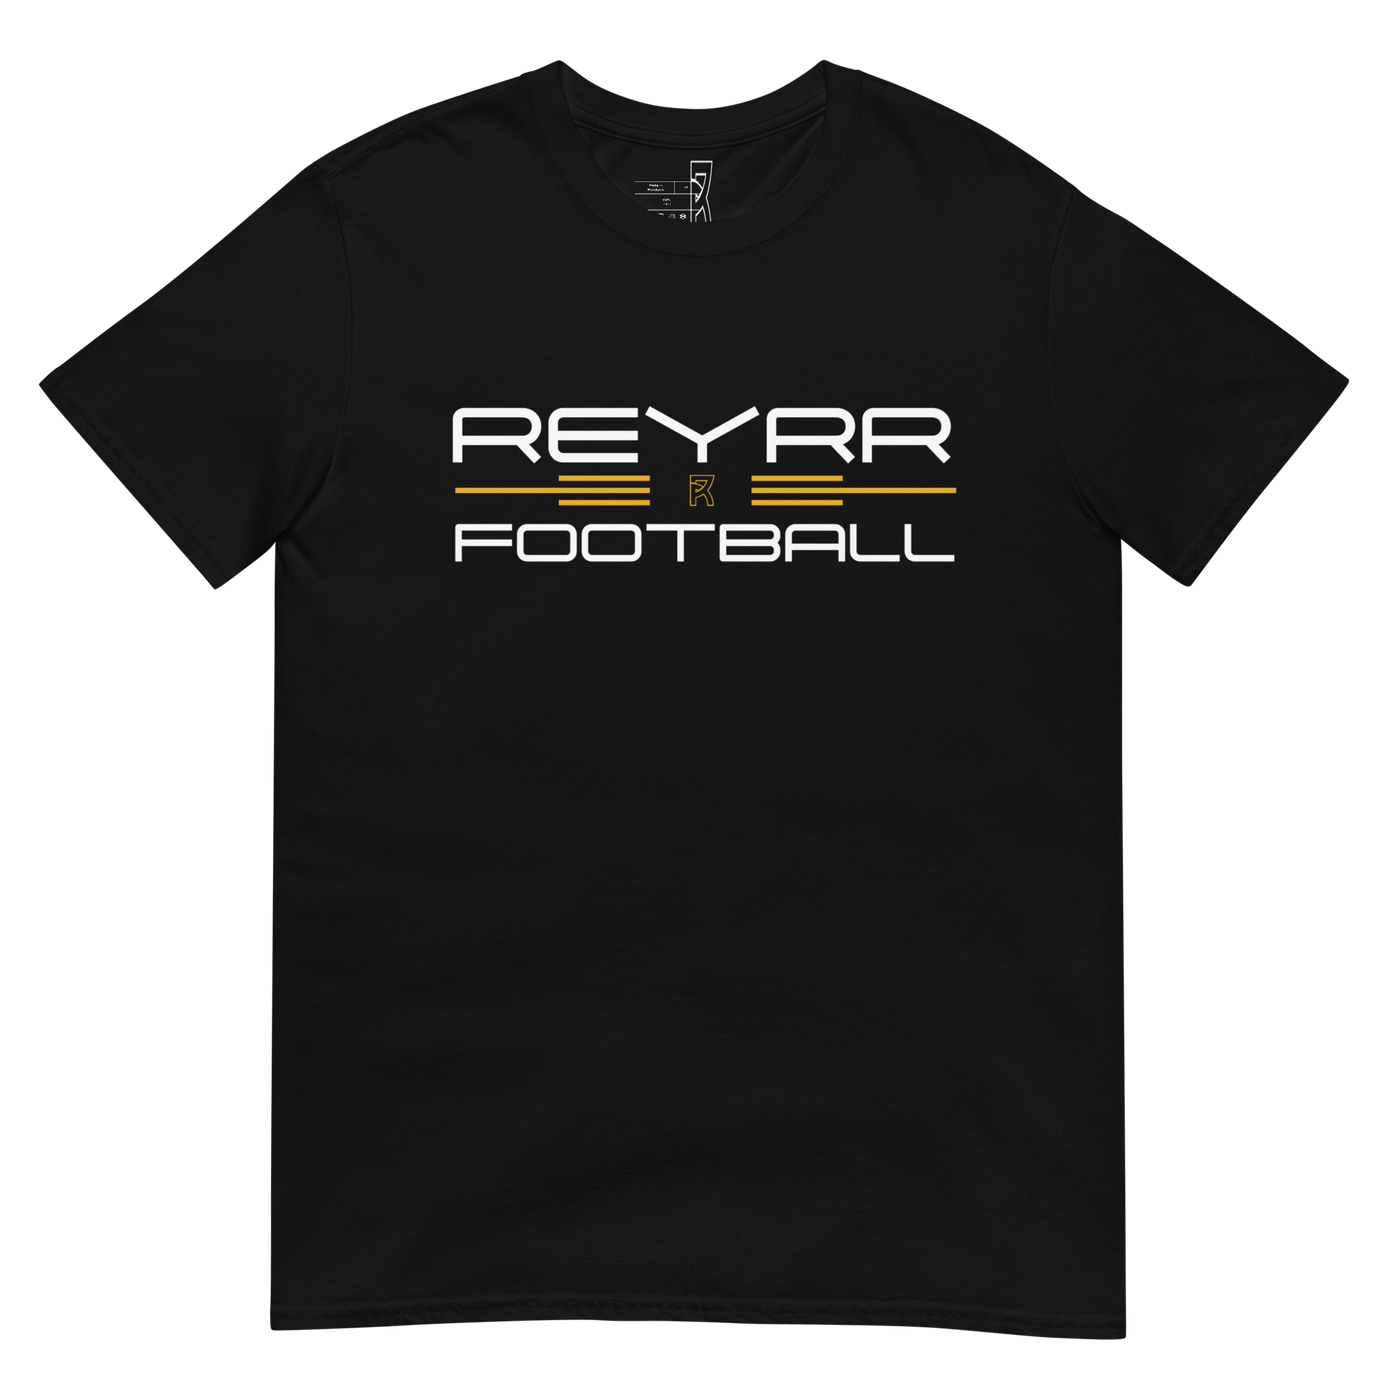 REYRR FOOTBALL T-SHIRT - Premium  from Reyrr Athletics - Shop now at Reyrr Athletics